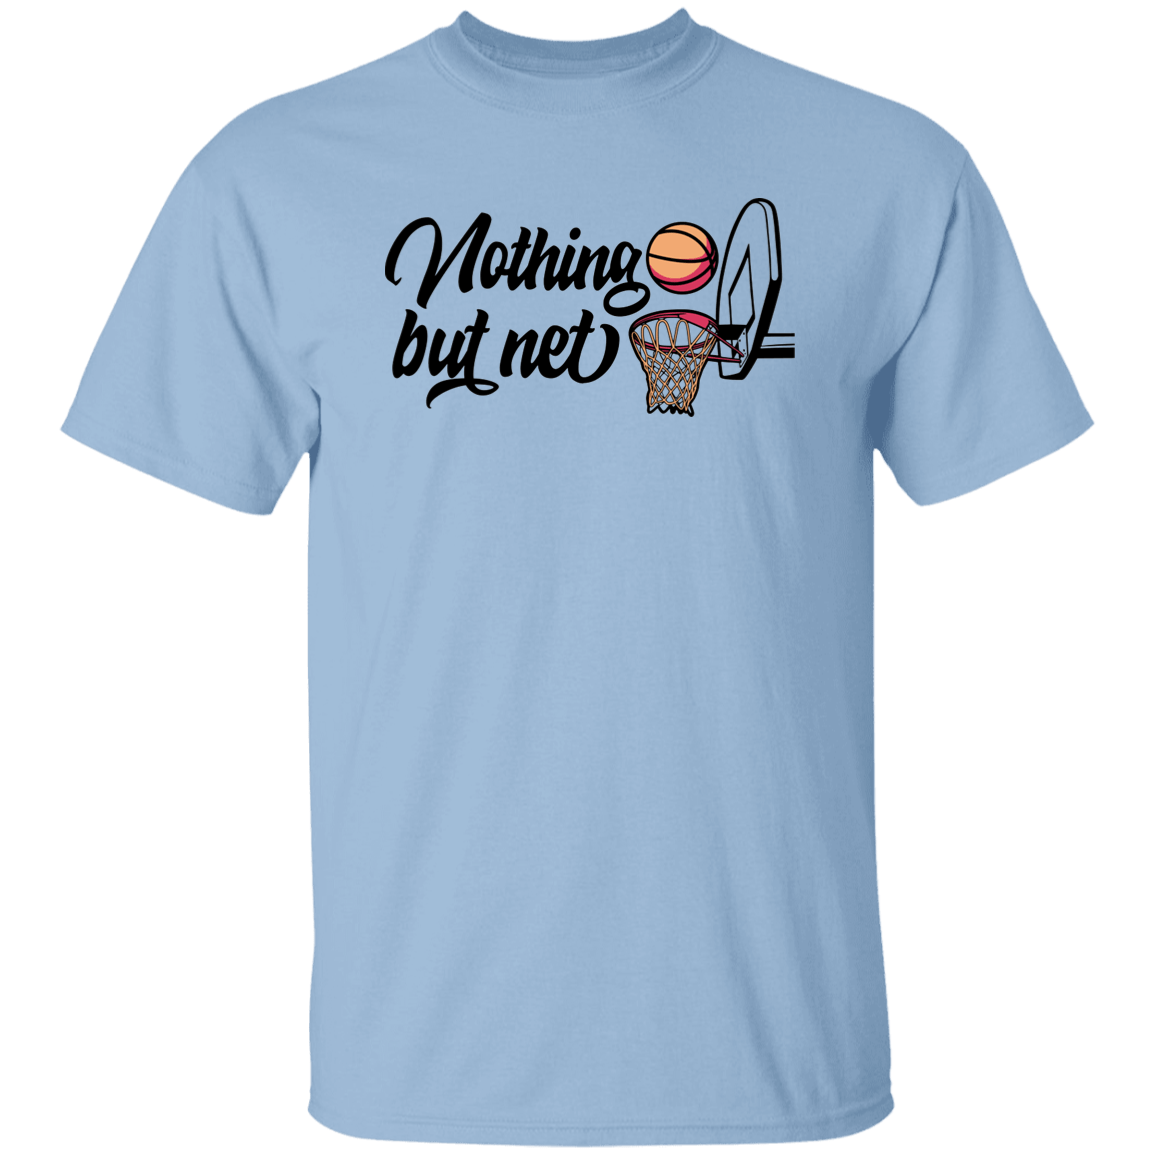 Nothing but net T-Shirt